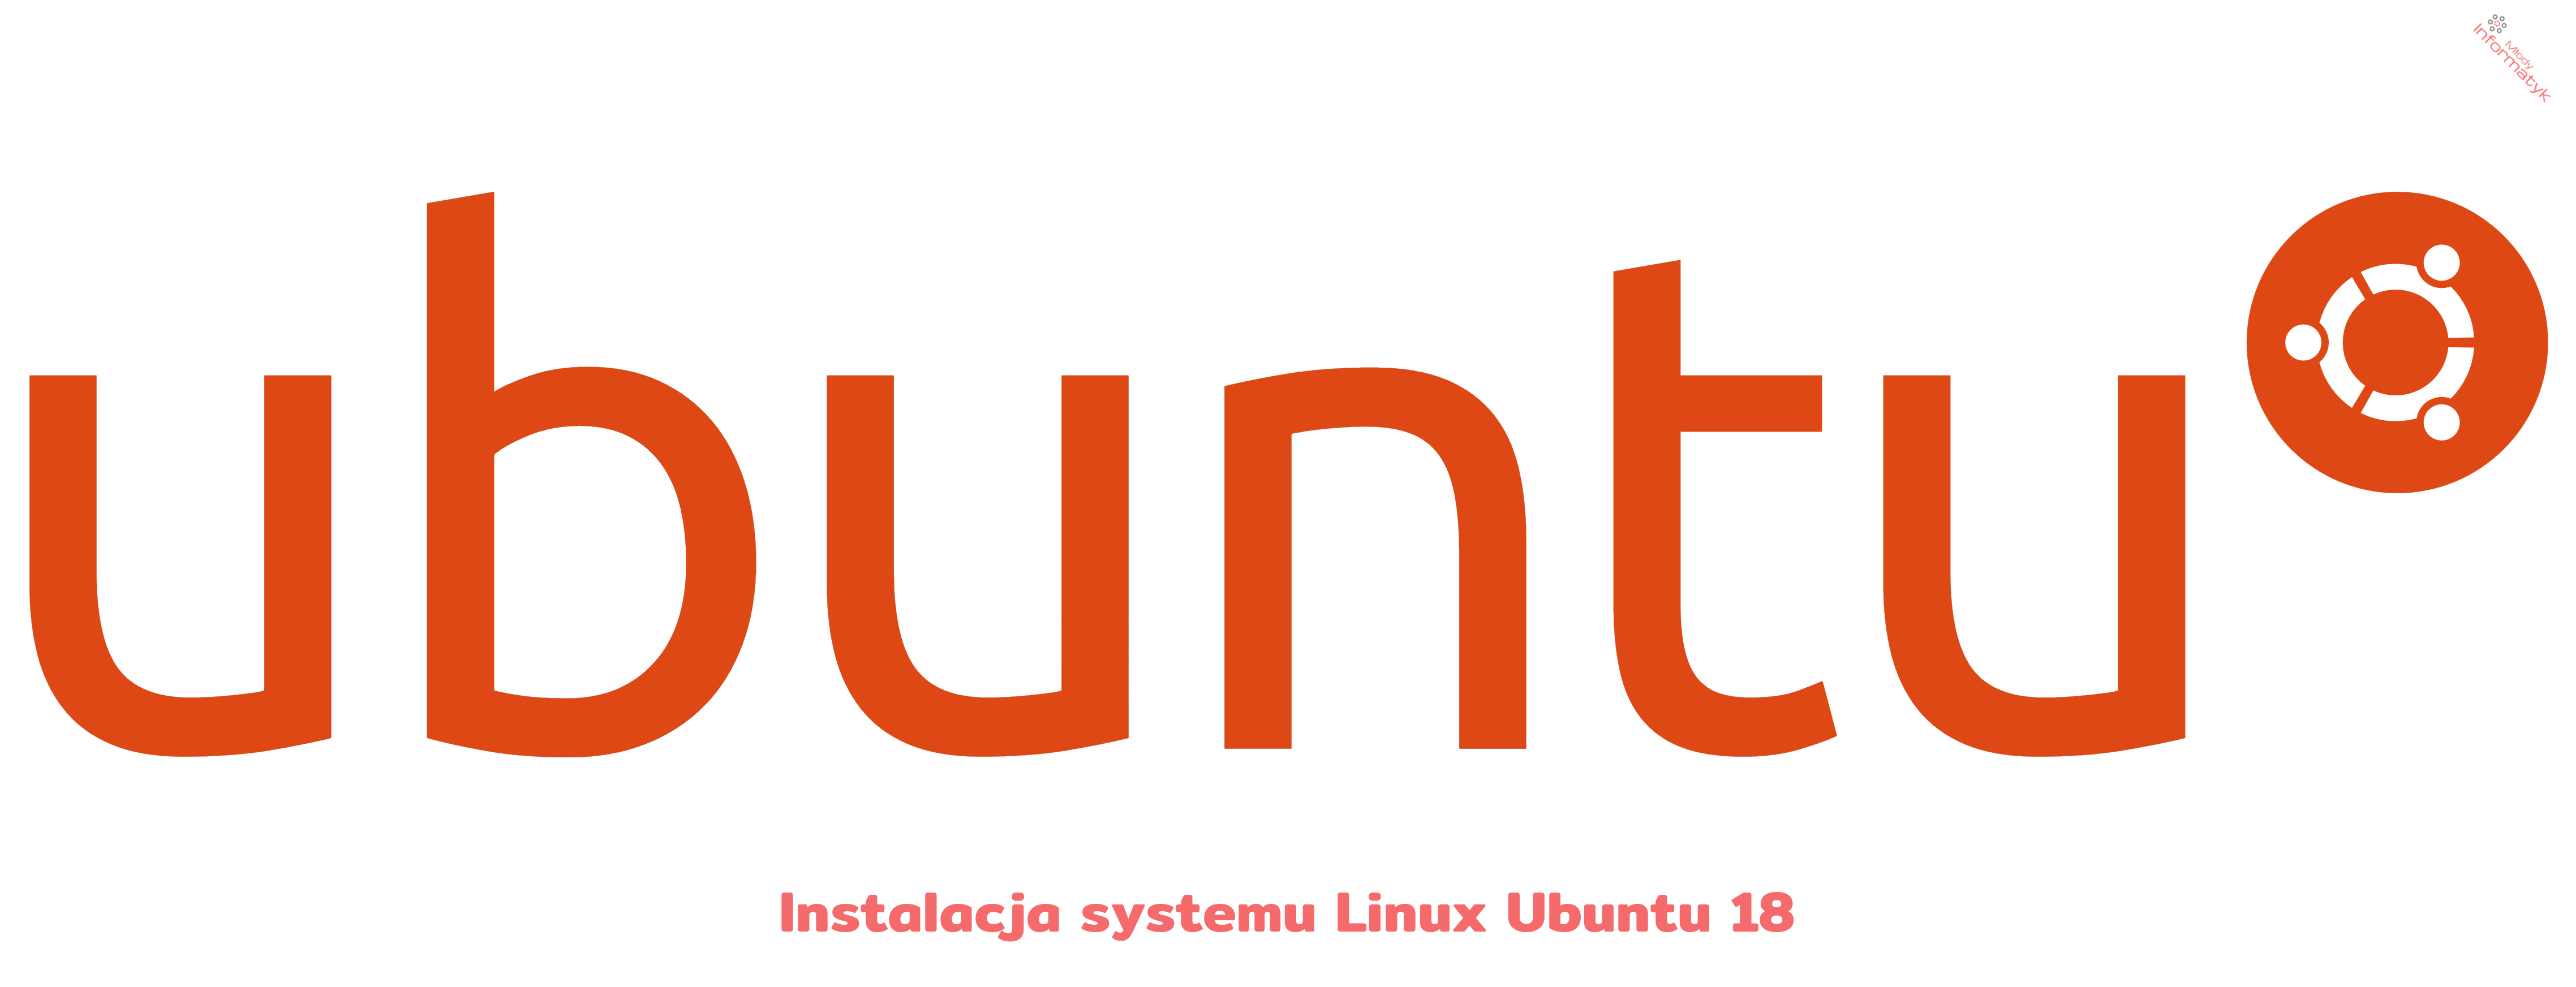 Instalacja systemu Linux Ubuntu 20